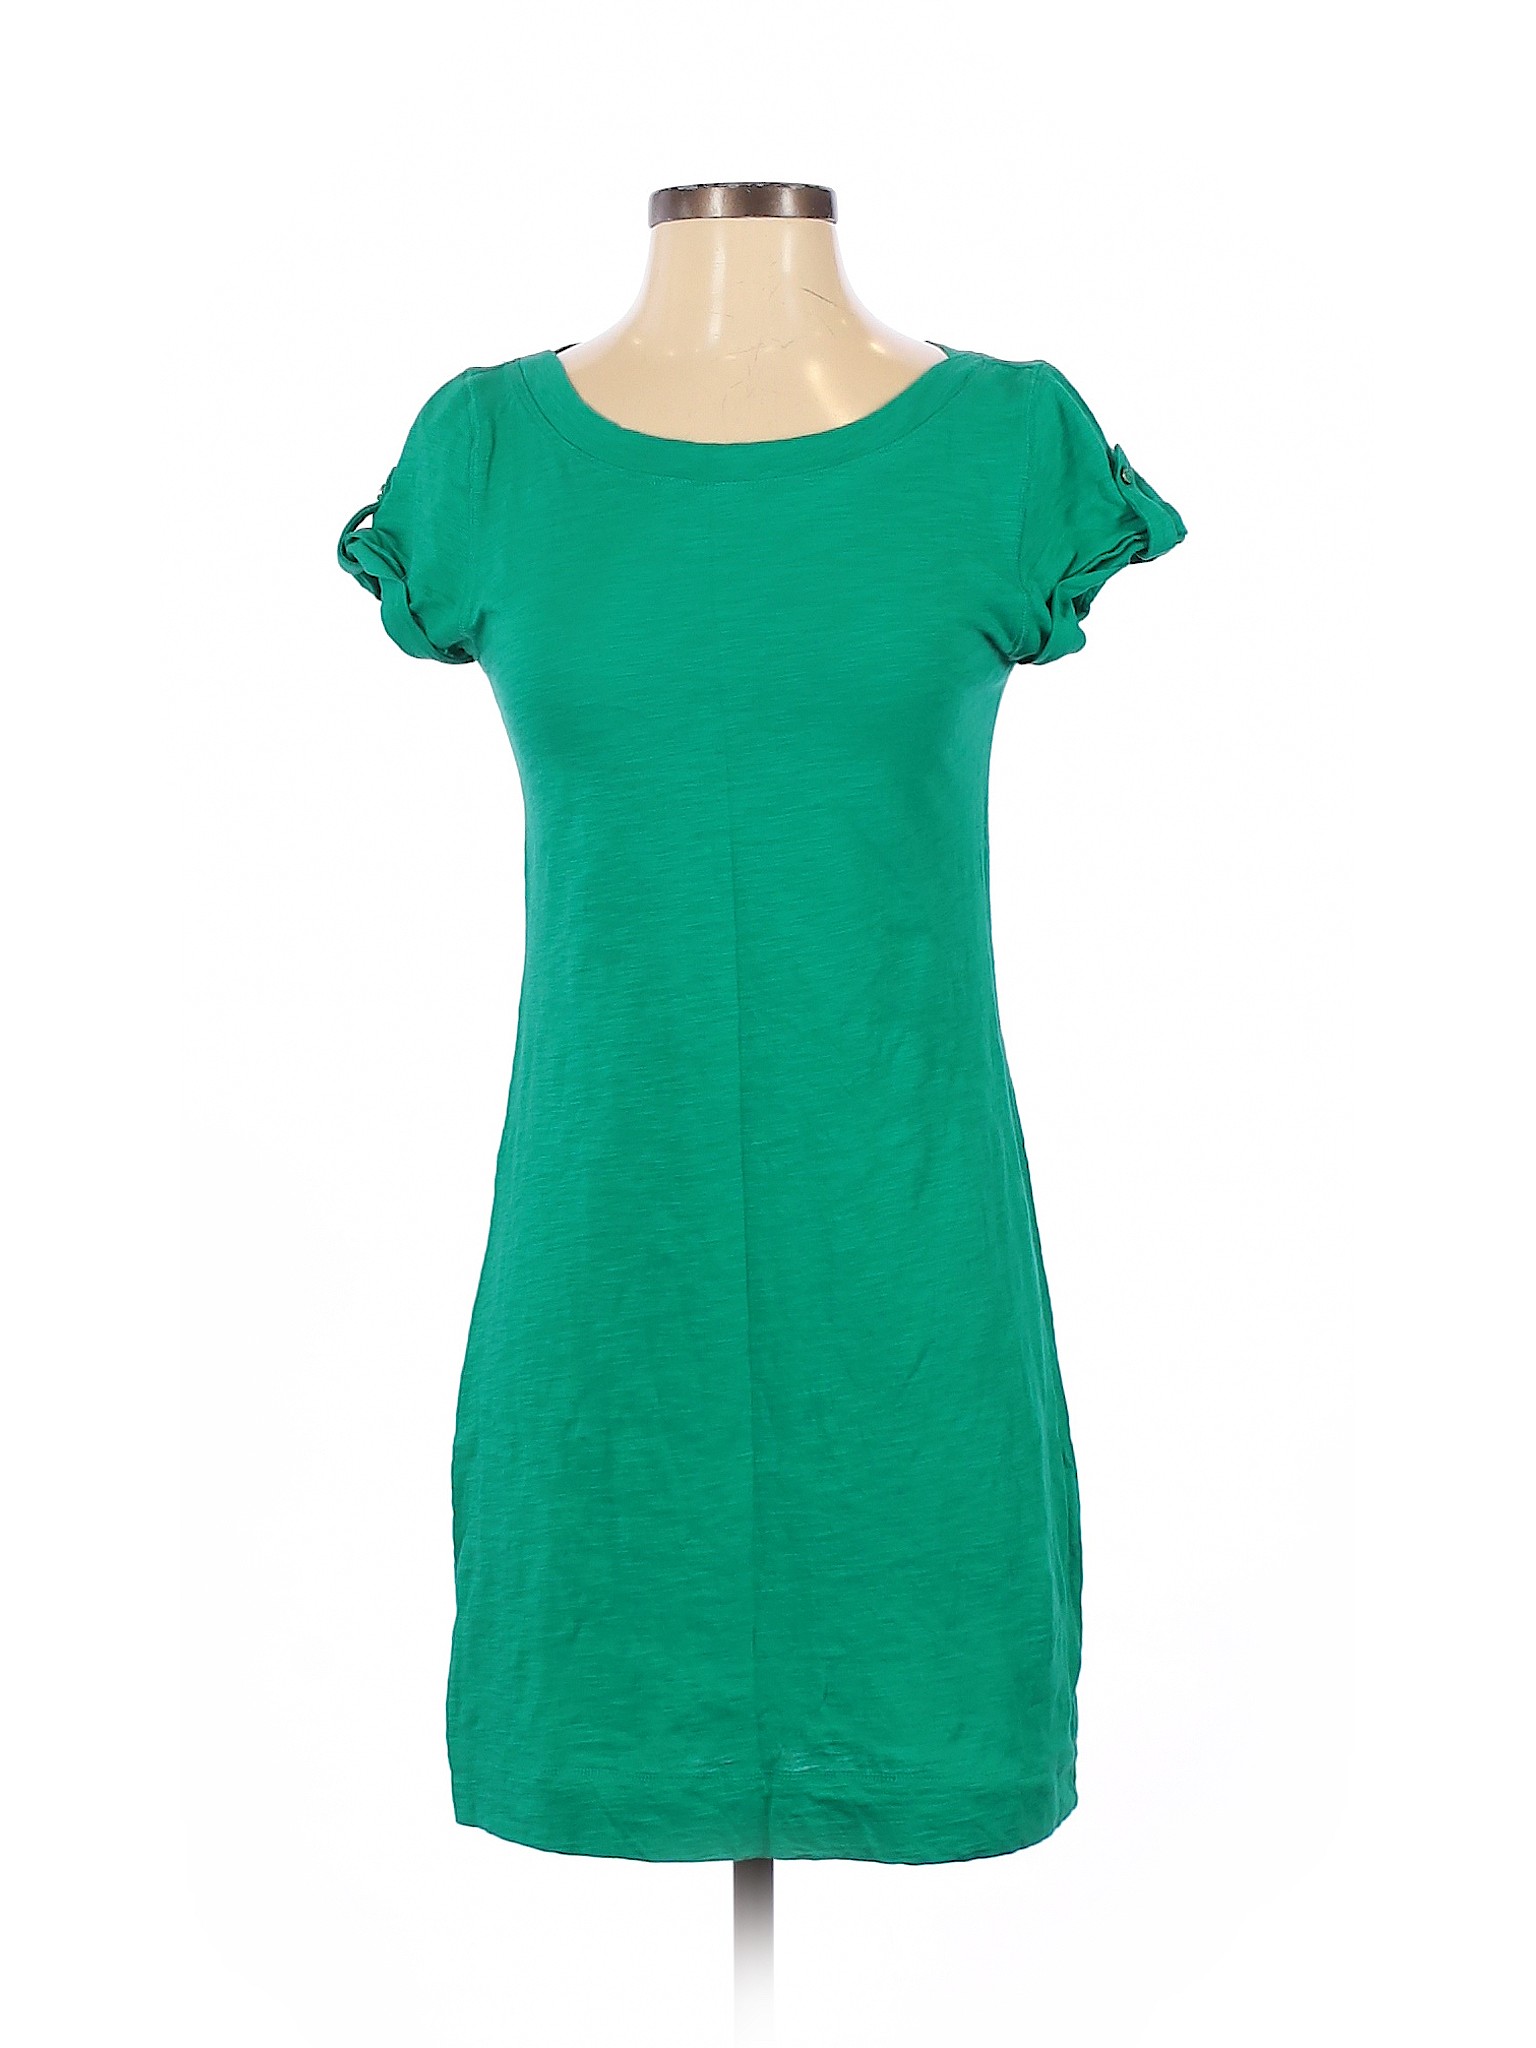 Banana Republic Factory Store Women Green Casual Dress XS Petites | eBay